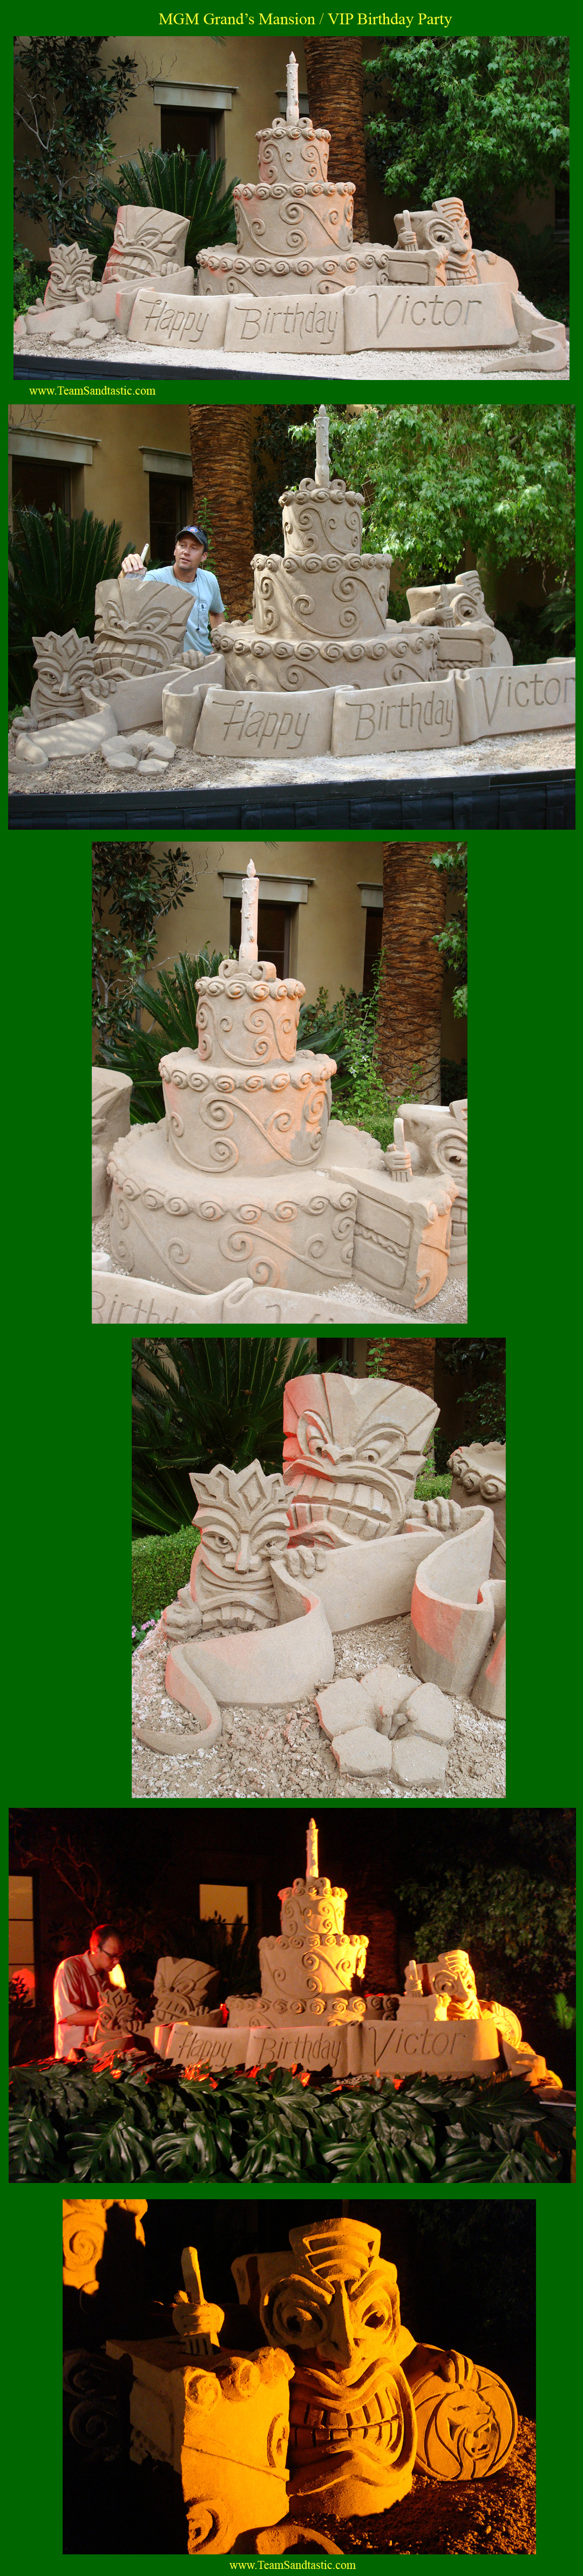 MGM Grand Sand Sculpture